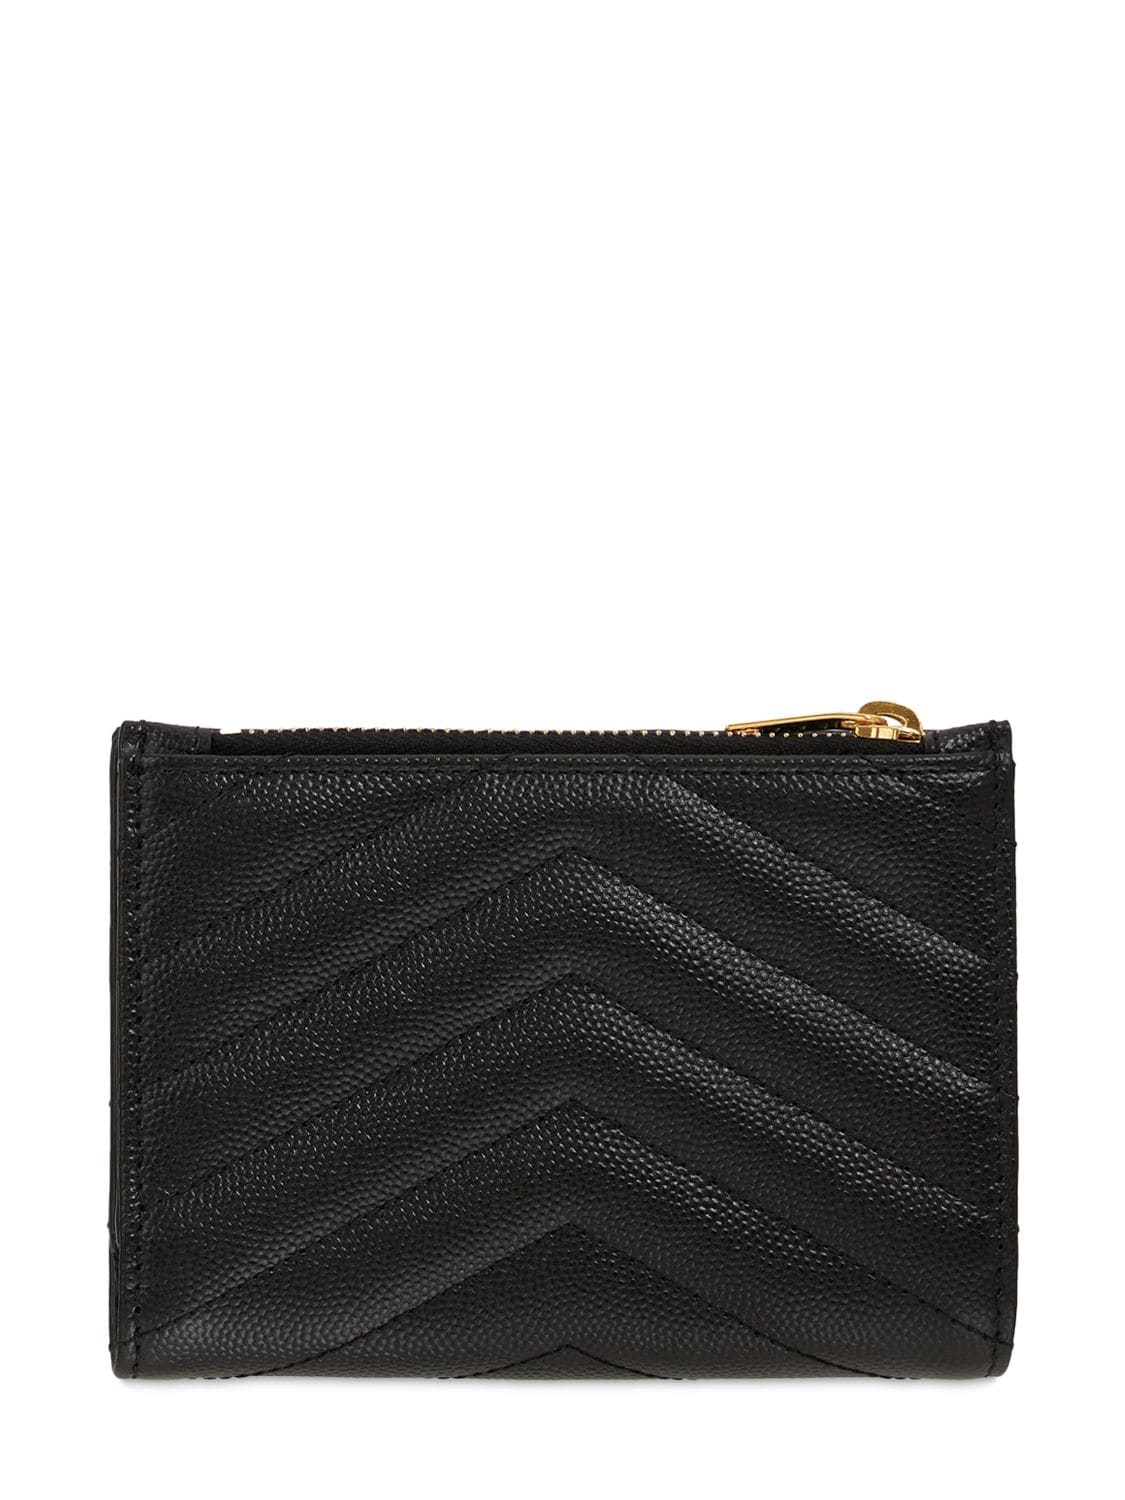 Shop Saint Laurent Ysl Leather Wallet In Black